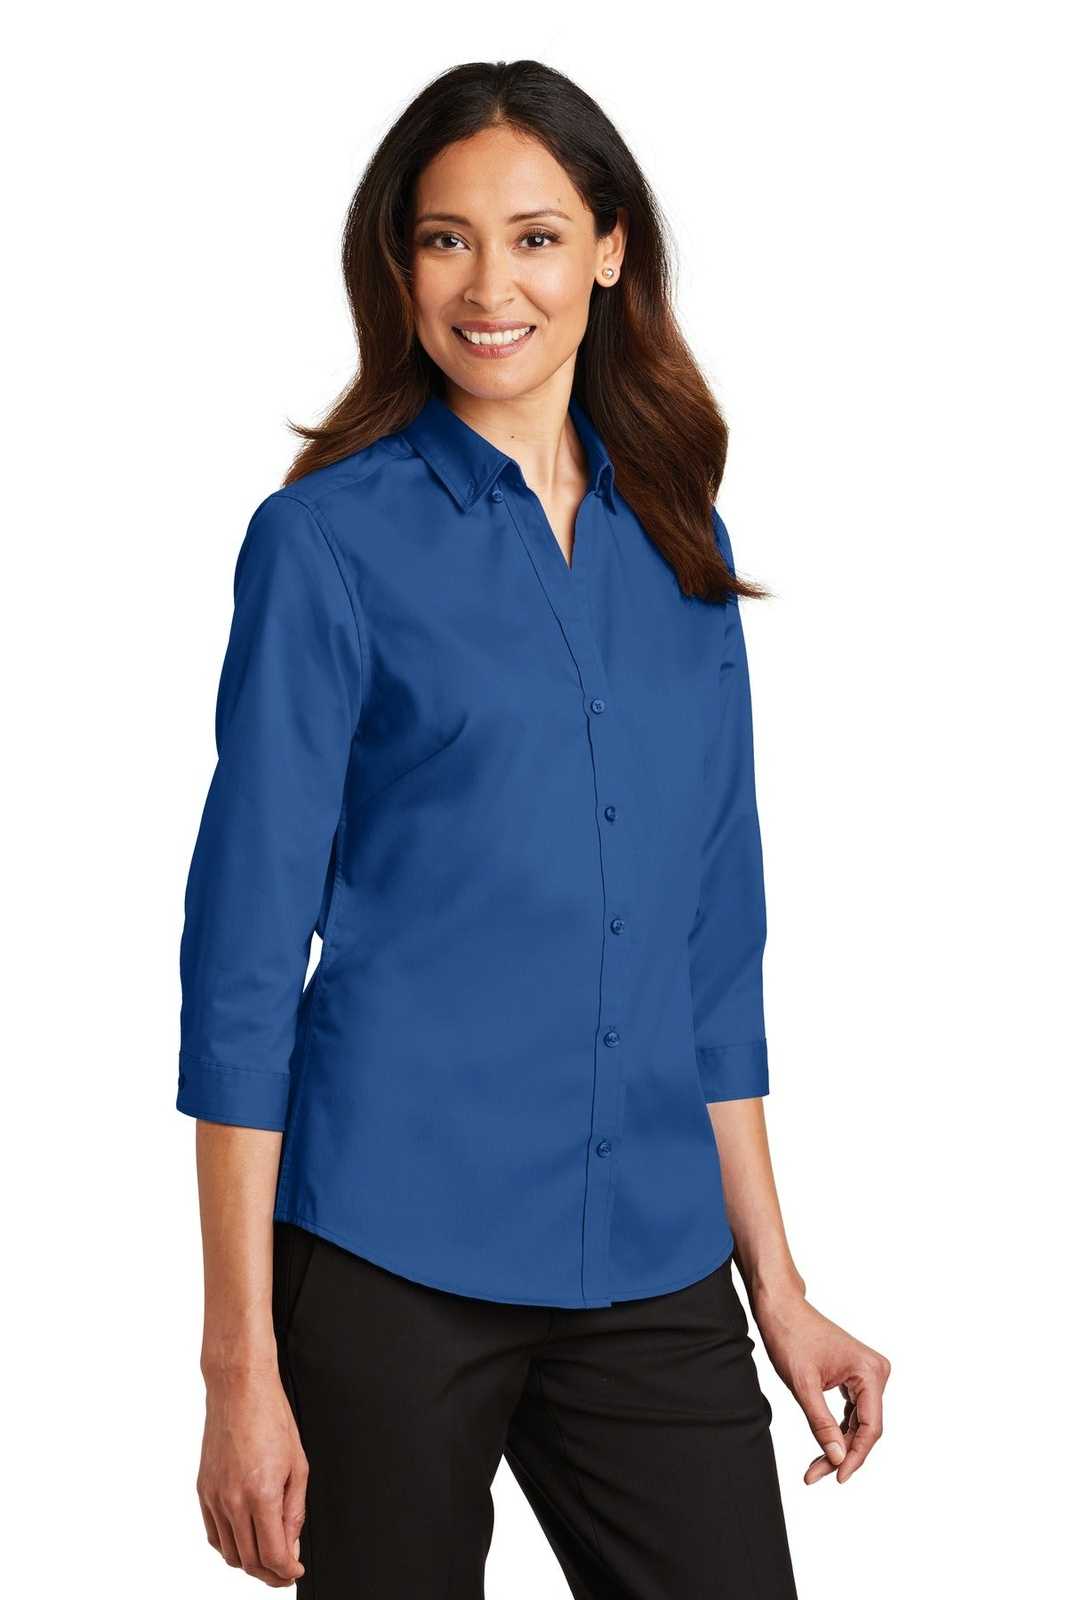 Port Authority L665 Ladies 3/4-Sleeve Superpro Twill Shirt - True Blue - HIT a Double - 4